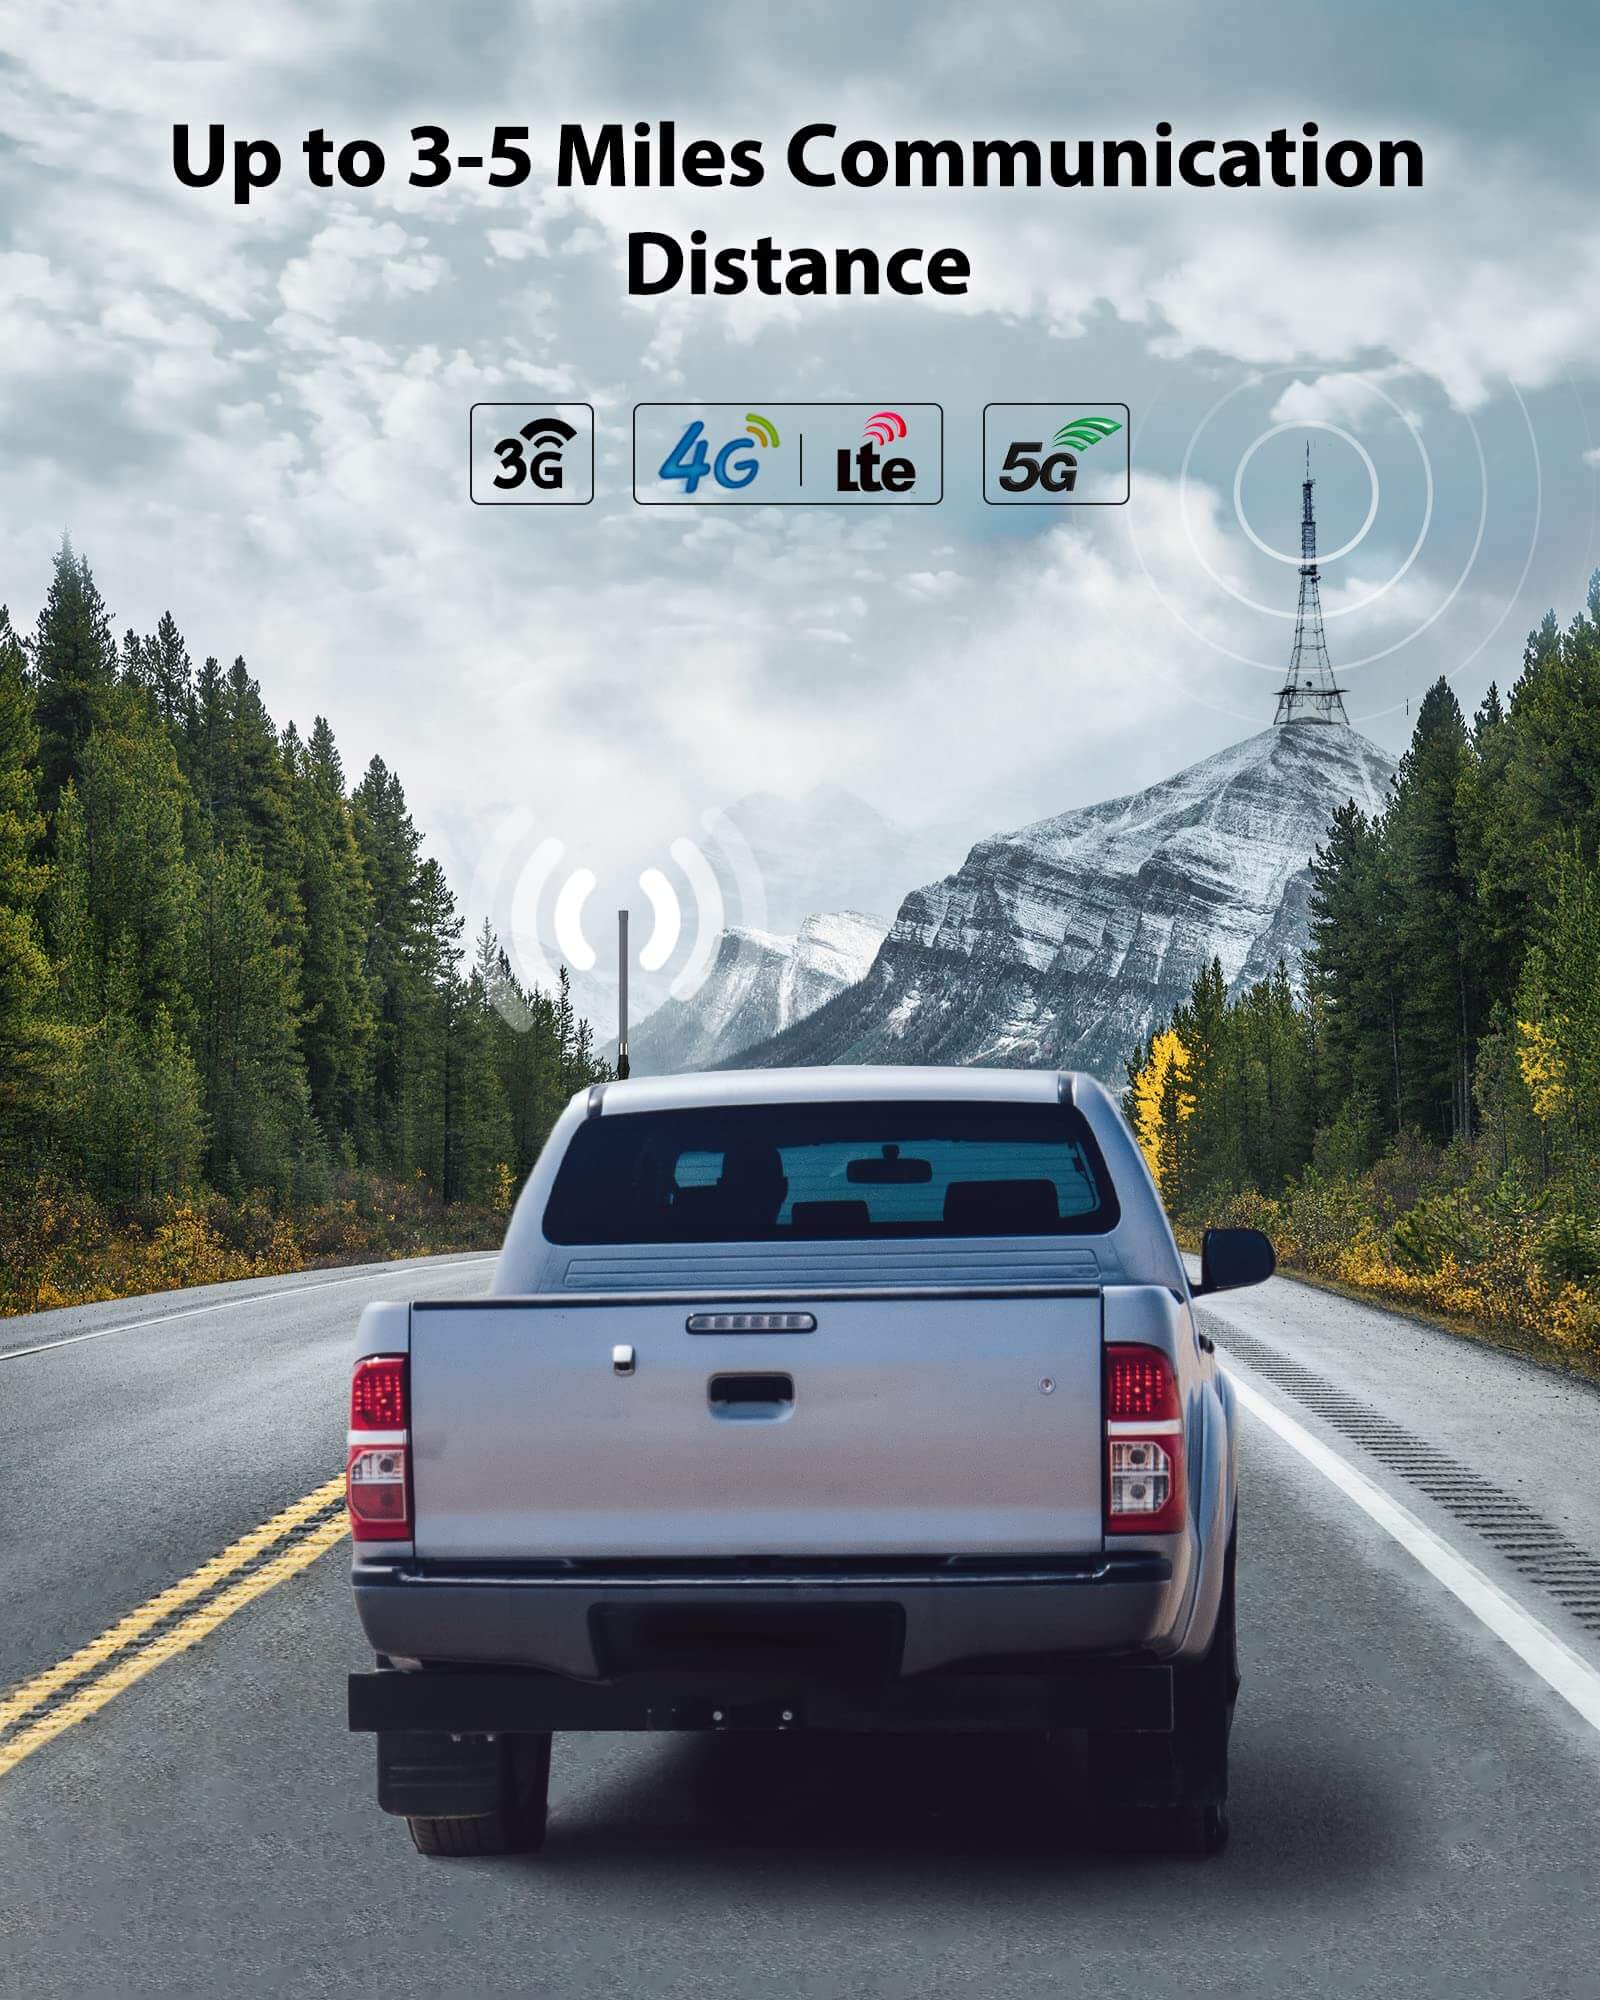  HiBoost Amplificador de señal de teléfono celular para camión, Kit de refuerzo de alta potencia